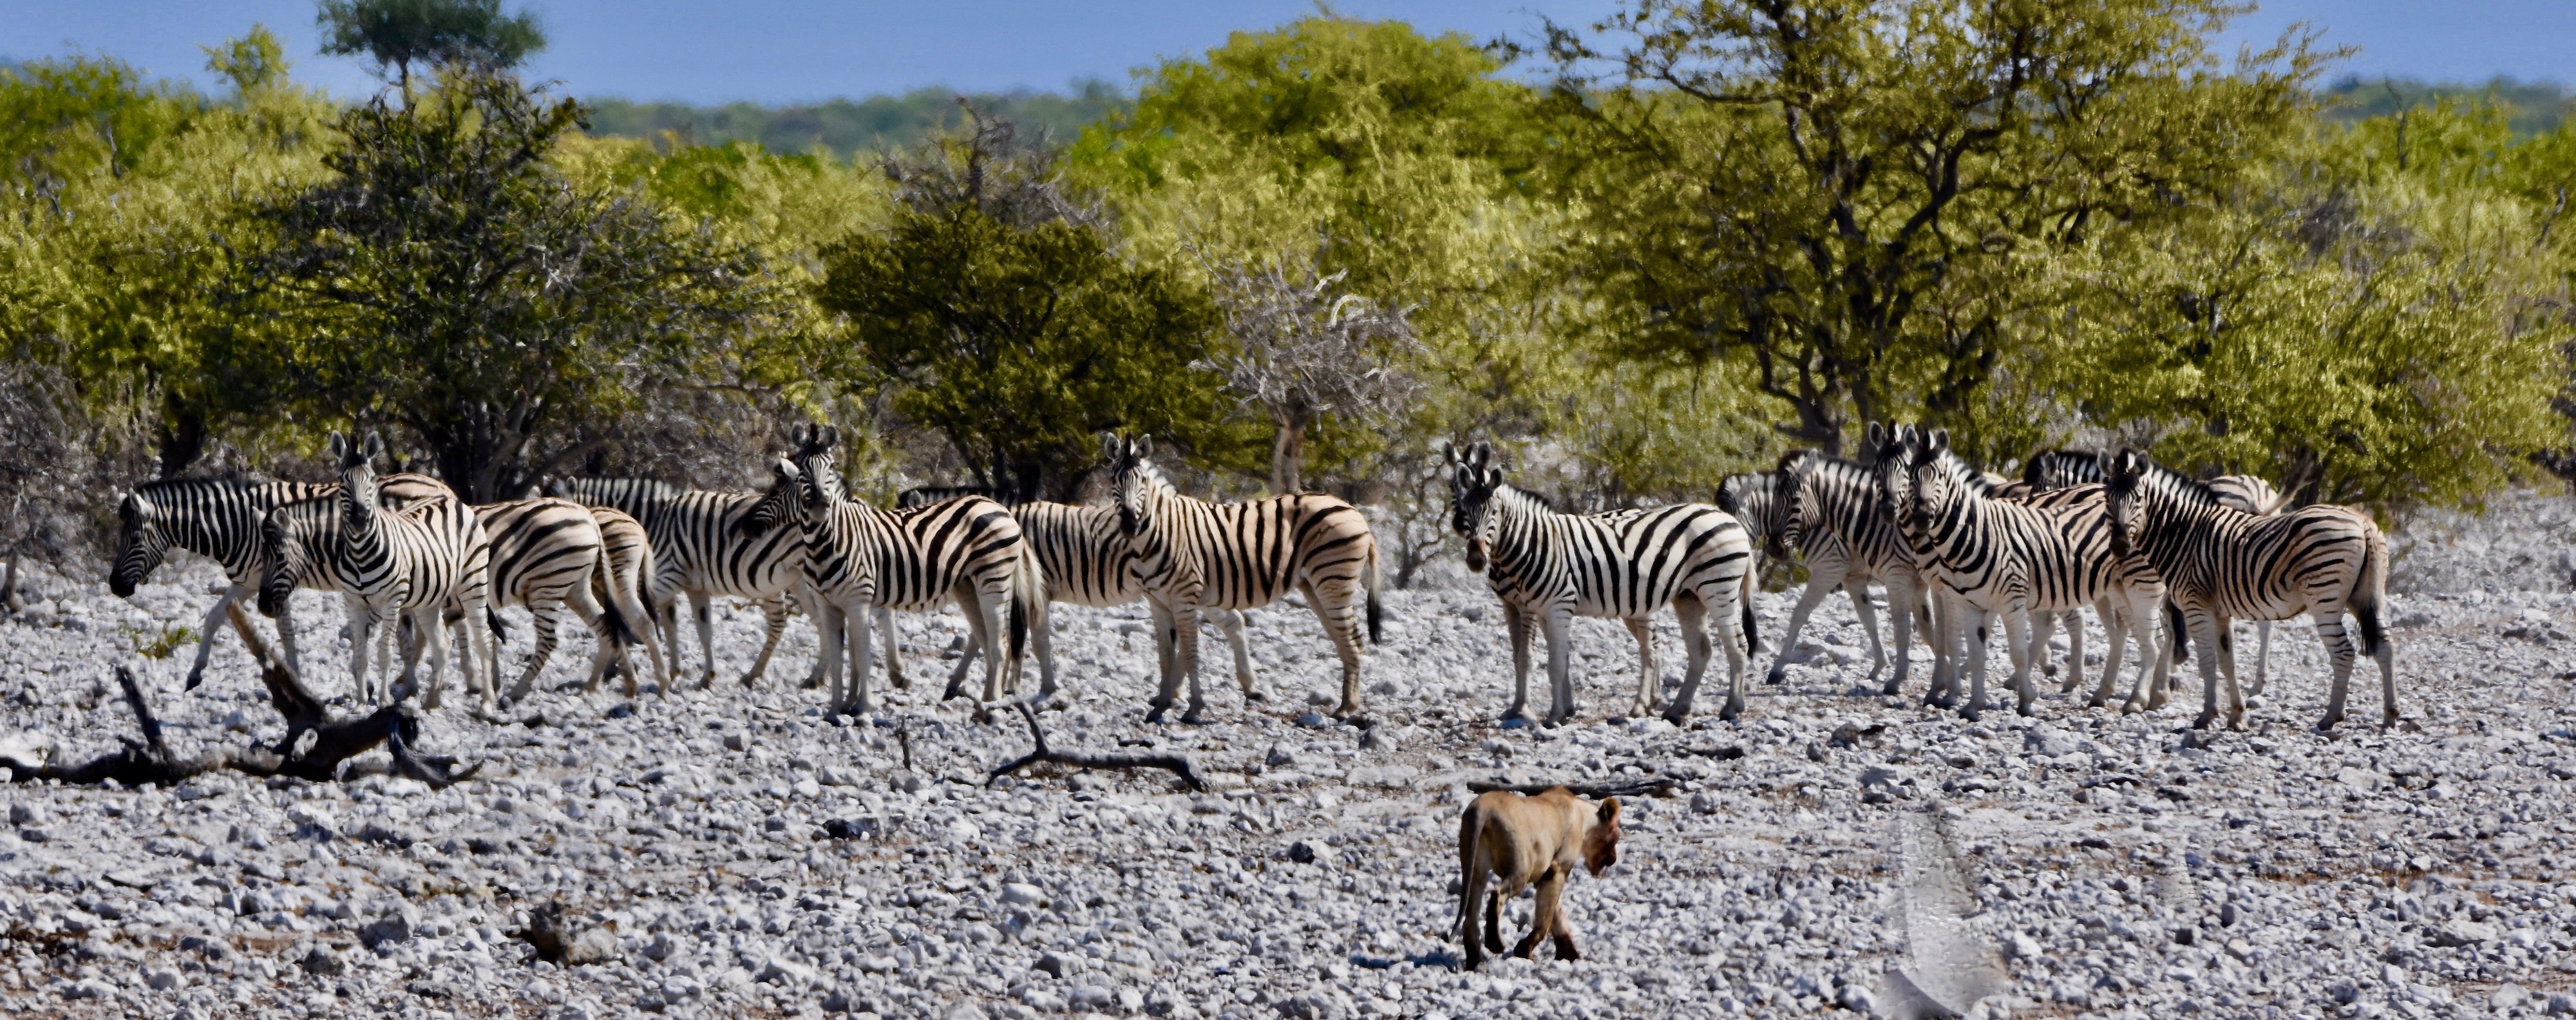 Lioness Bothering Zebra, Etosha